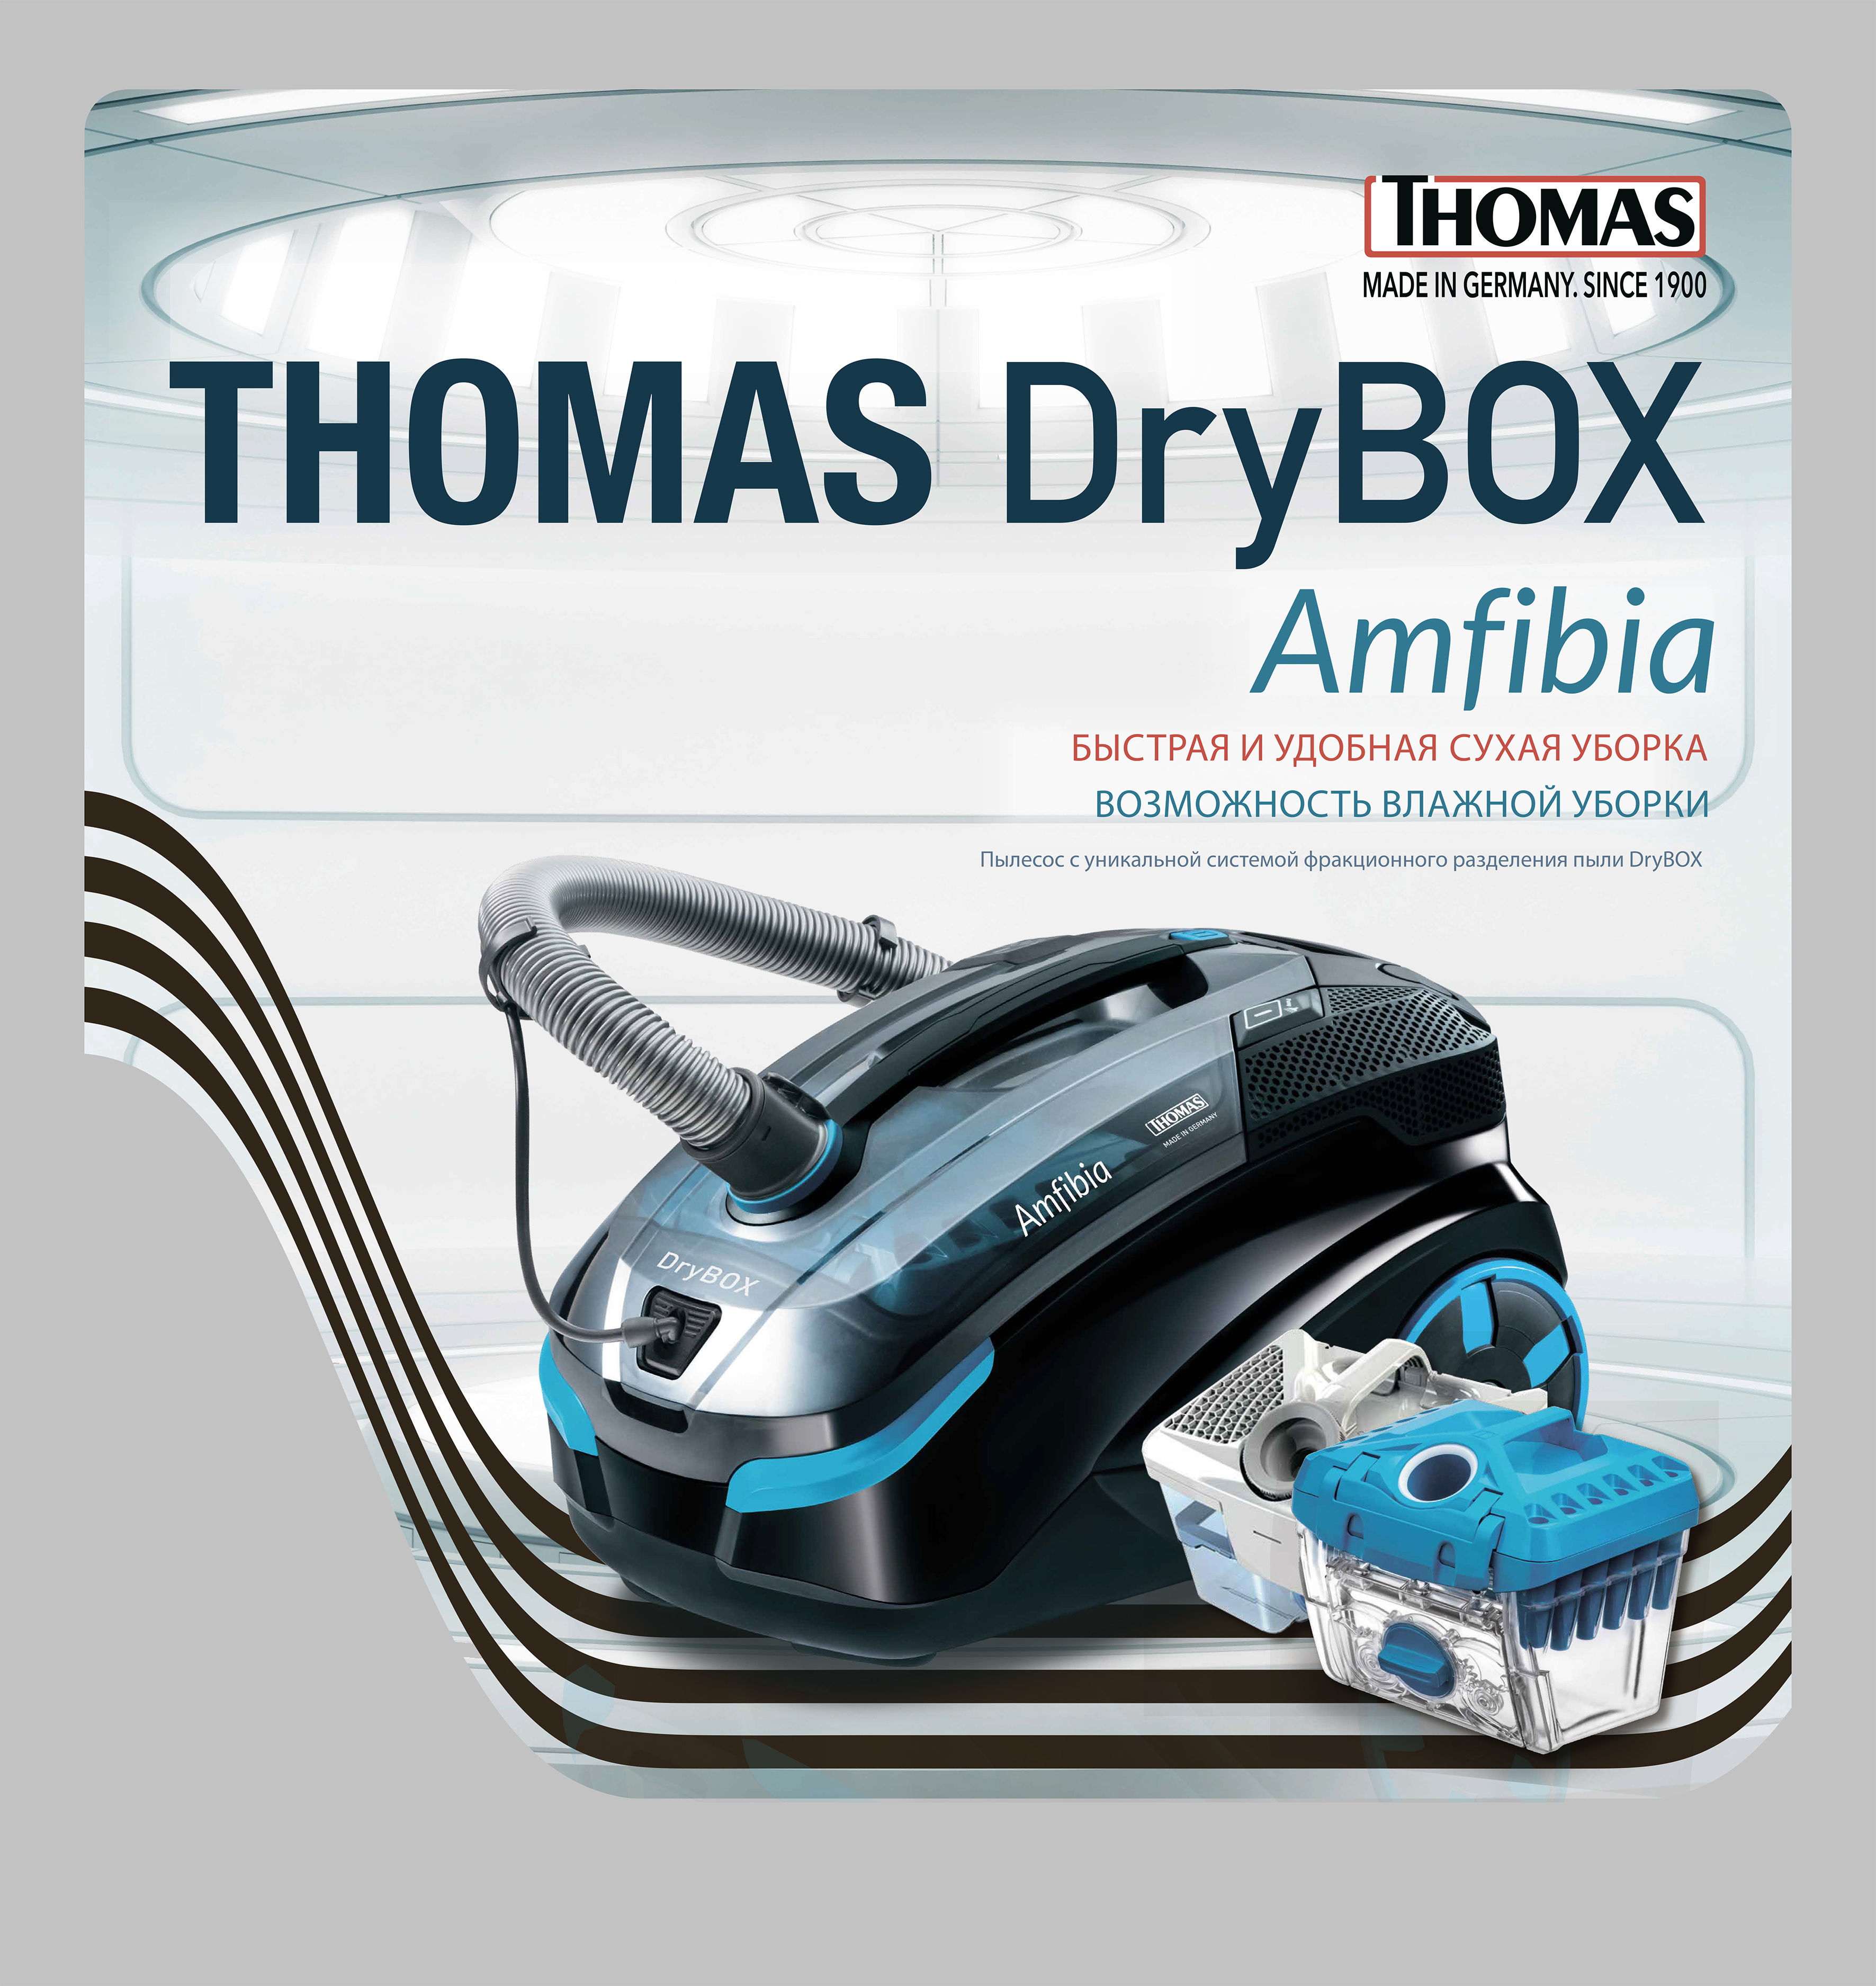 Thomas DRYBOX Amfibia. Thomas since 1900 моющий пылесос. Thomas drybox amfibia купить